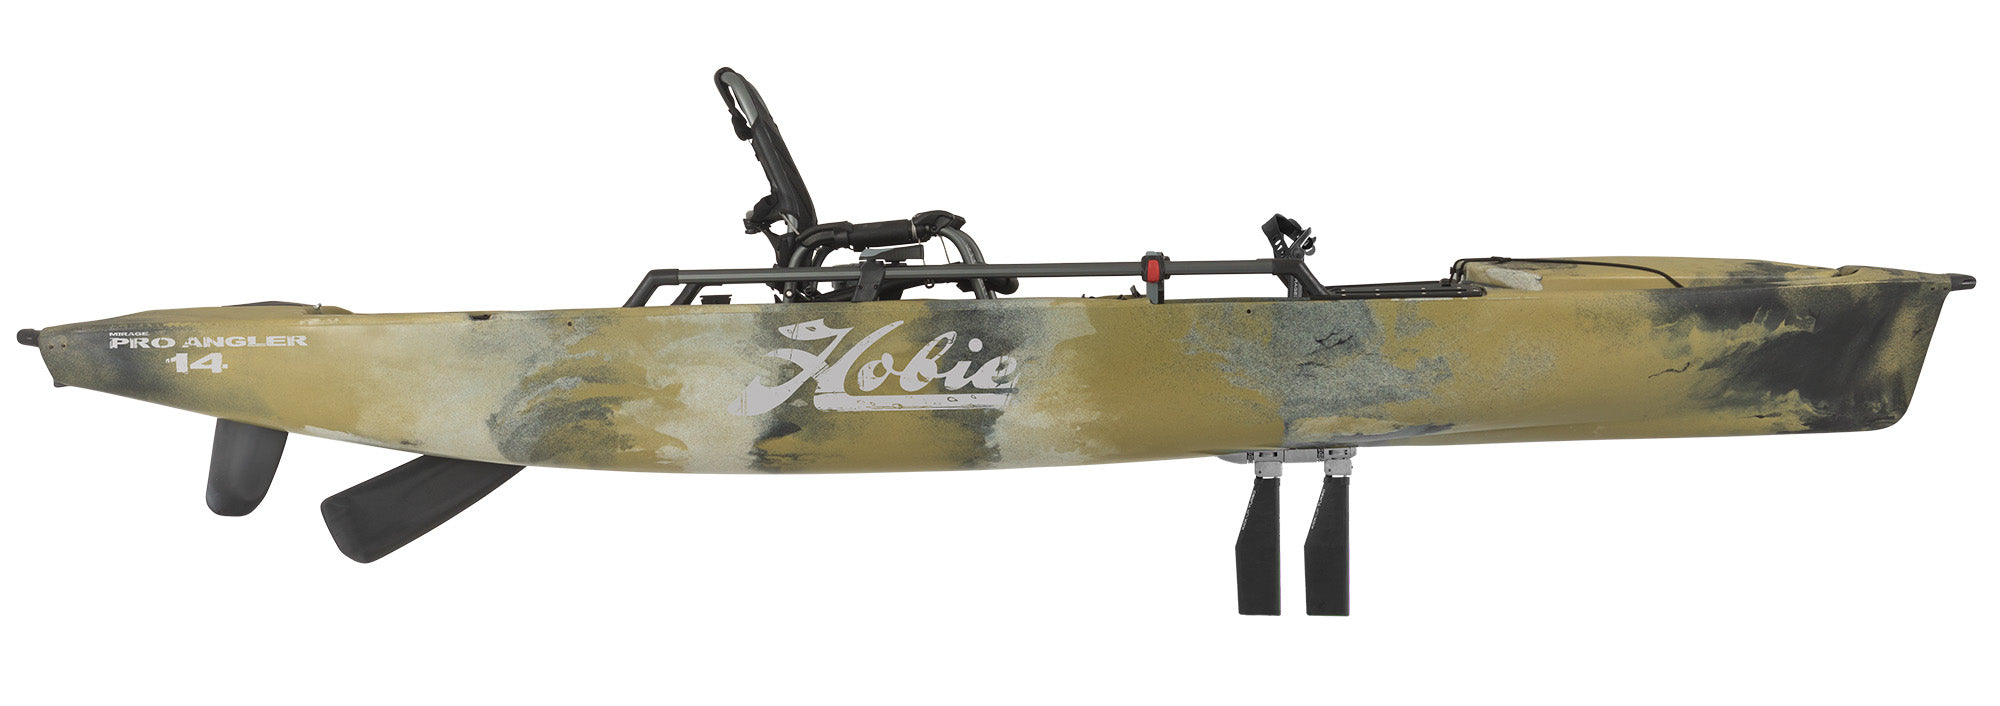 Hobie Pro Angler 14 sku: